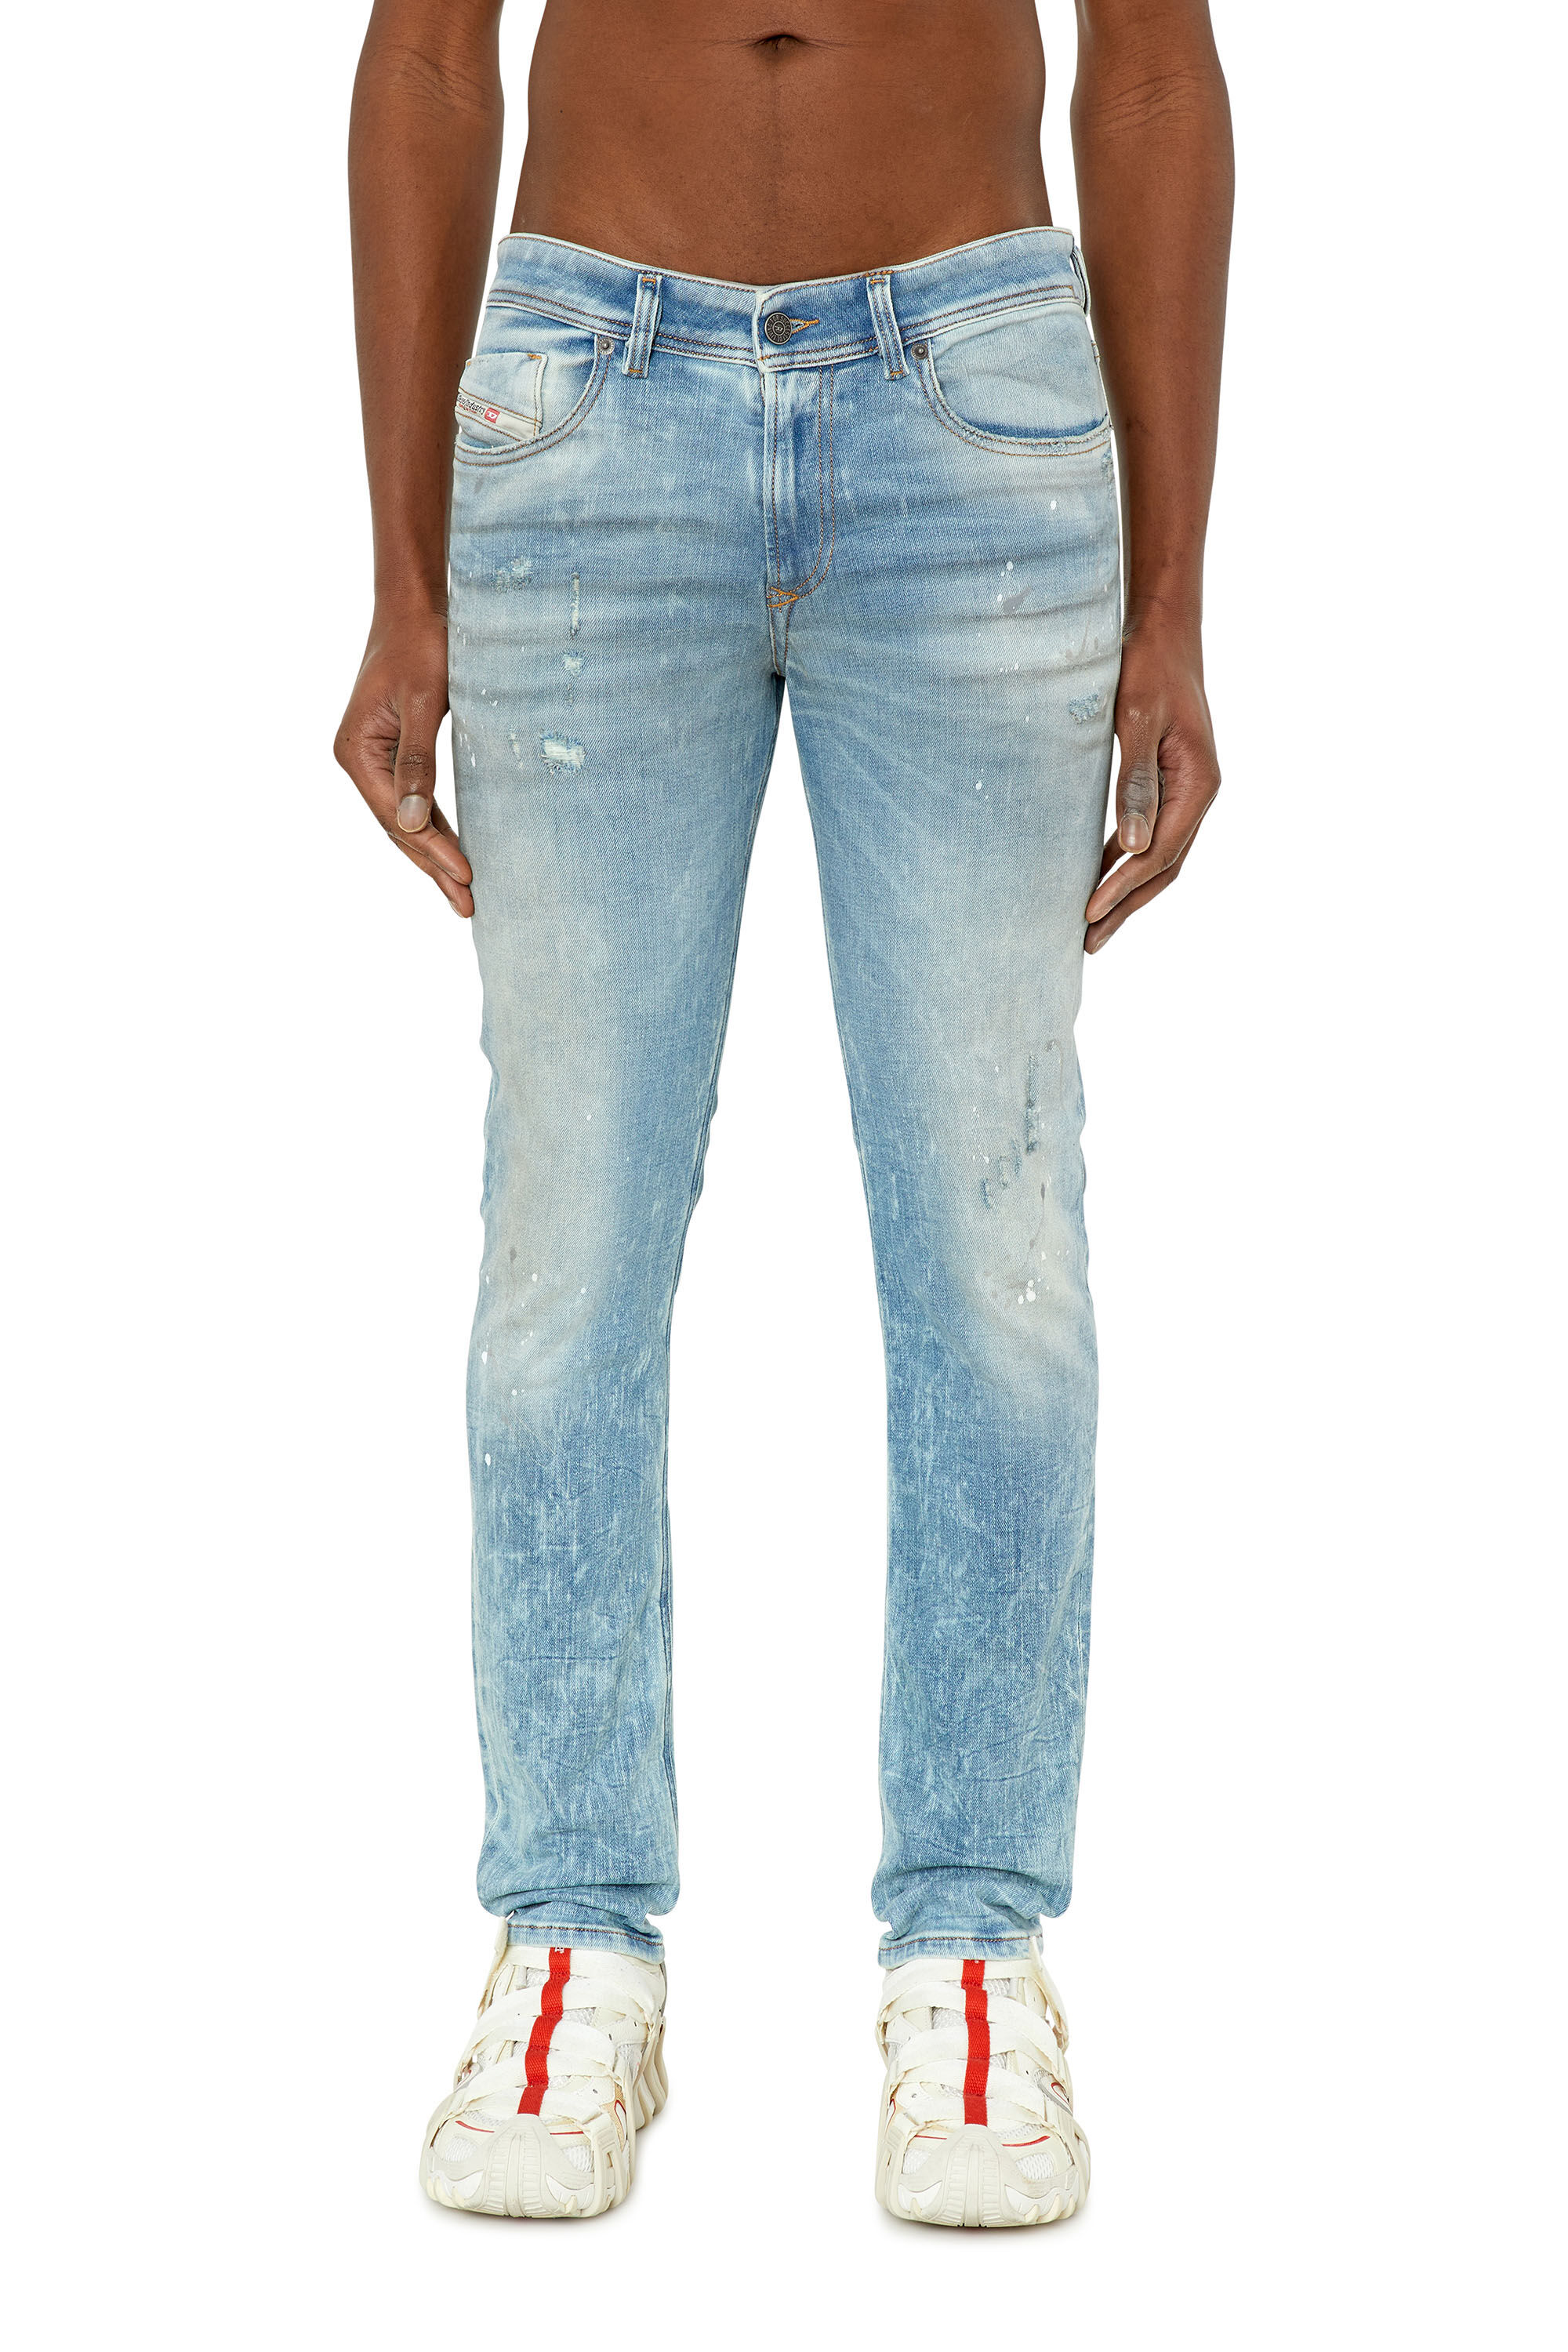 People’s Liberation Skinny jeans Distressed star detail on back pocket sz  30 X29